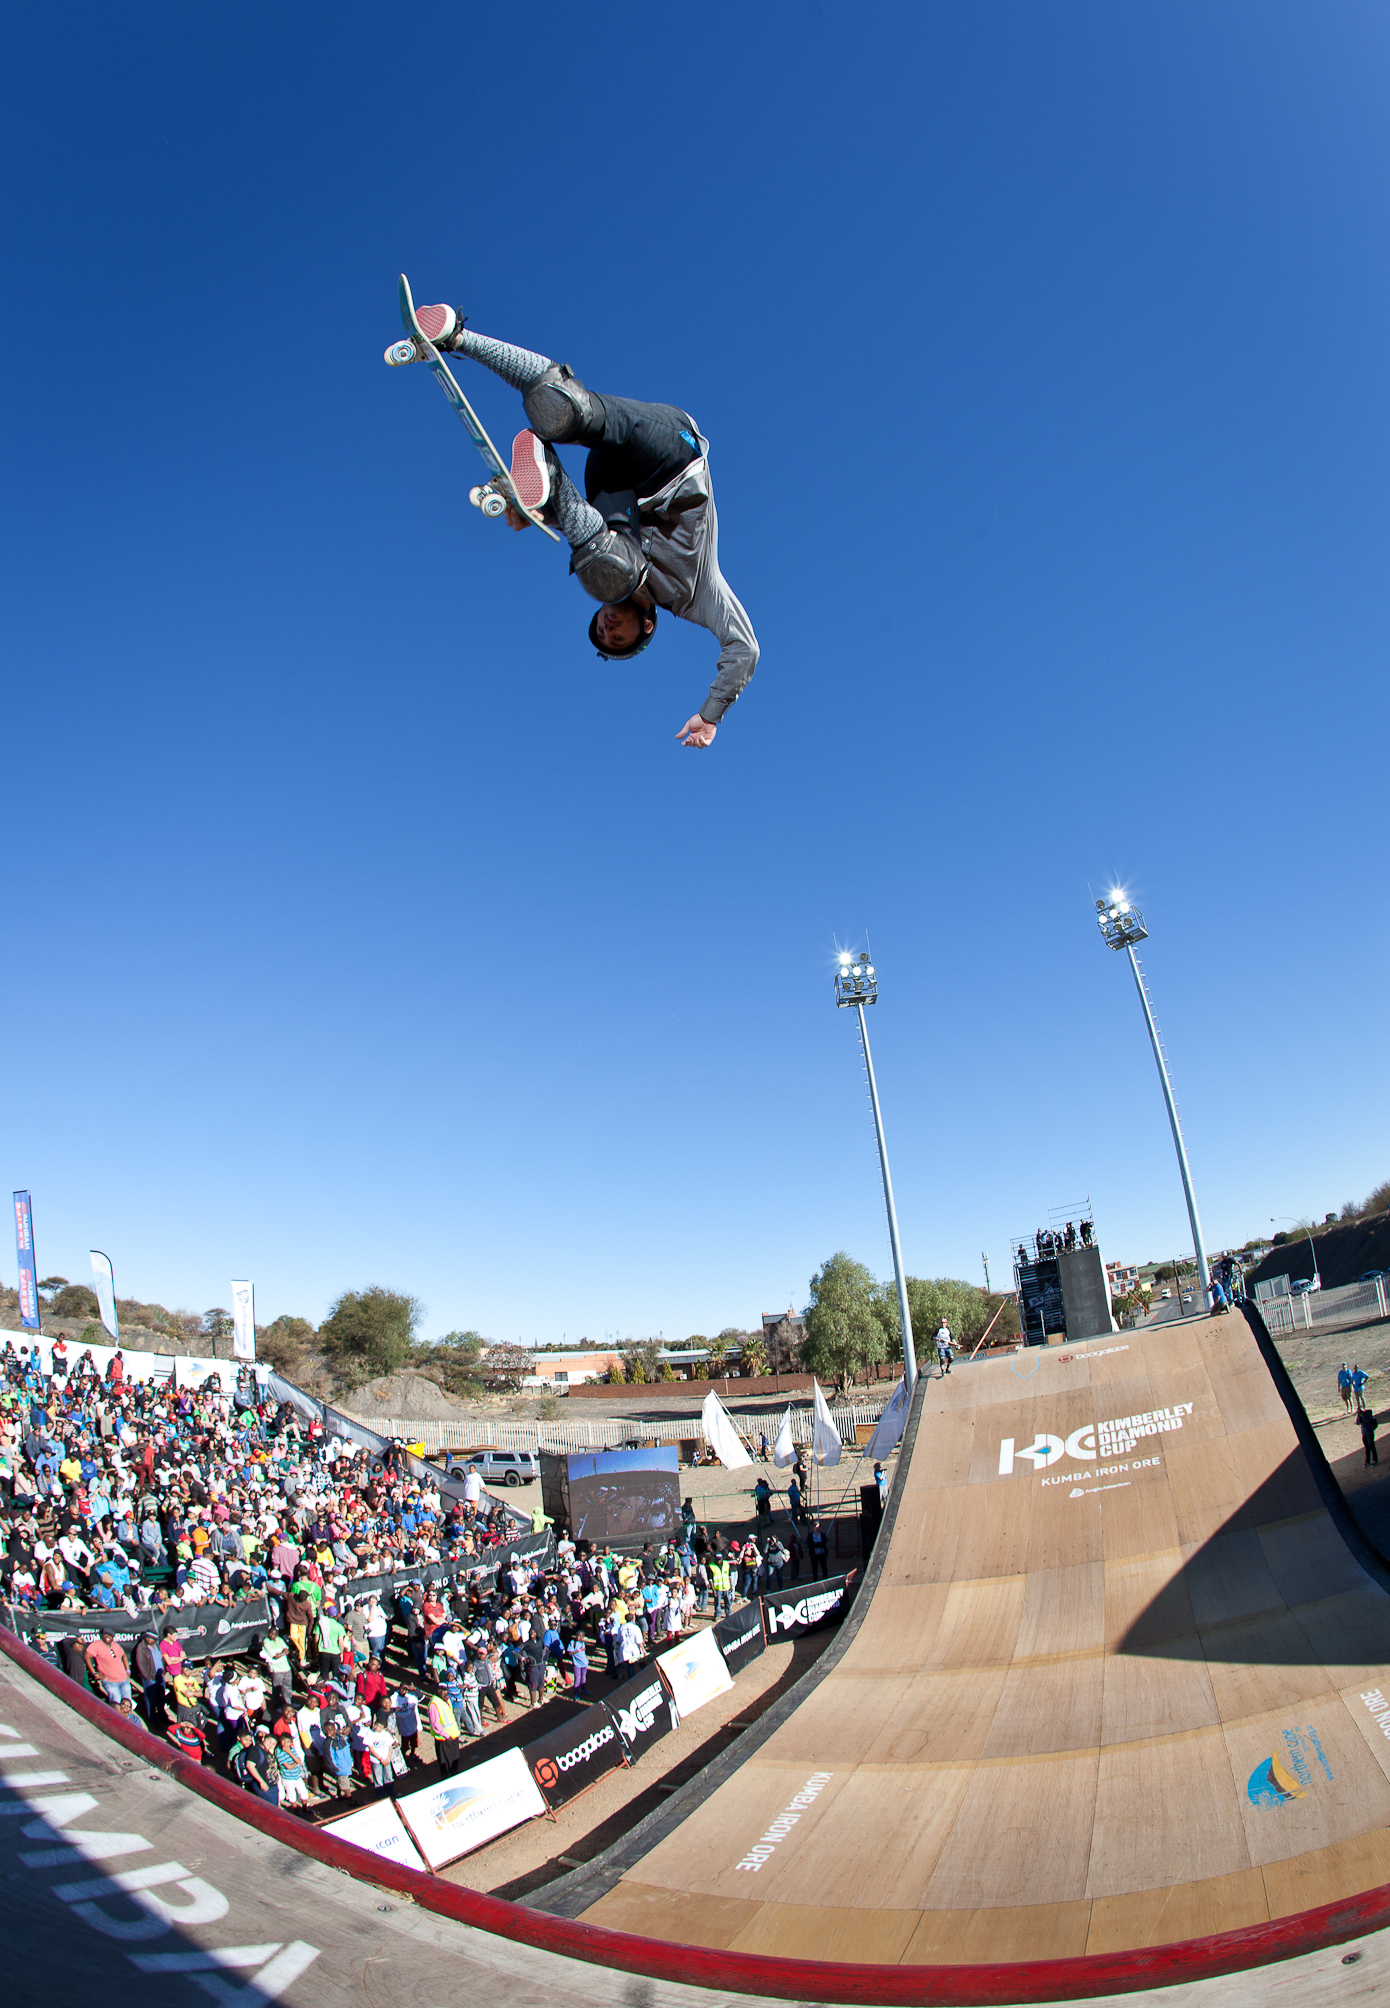 Skateboarding World Championships Return to South Africa